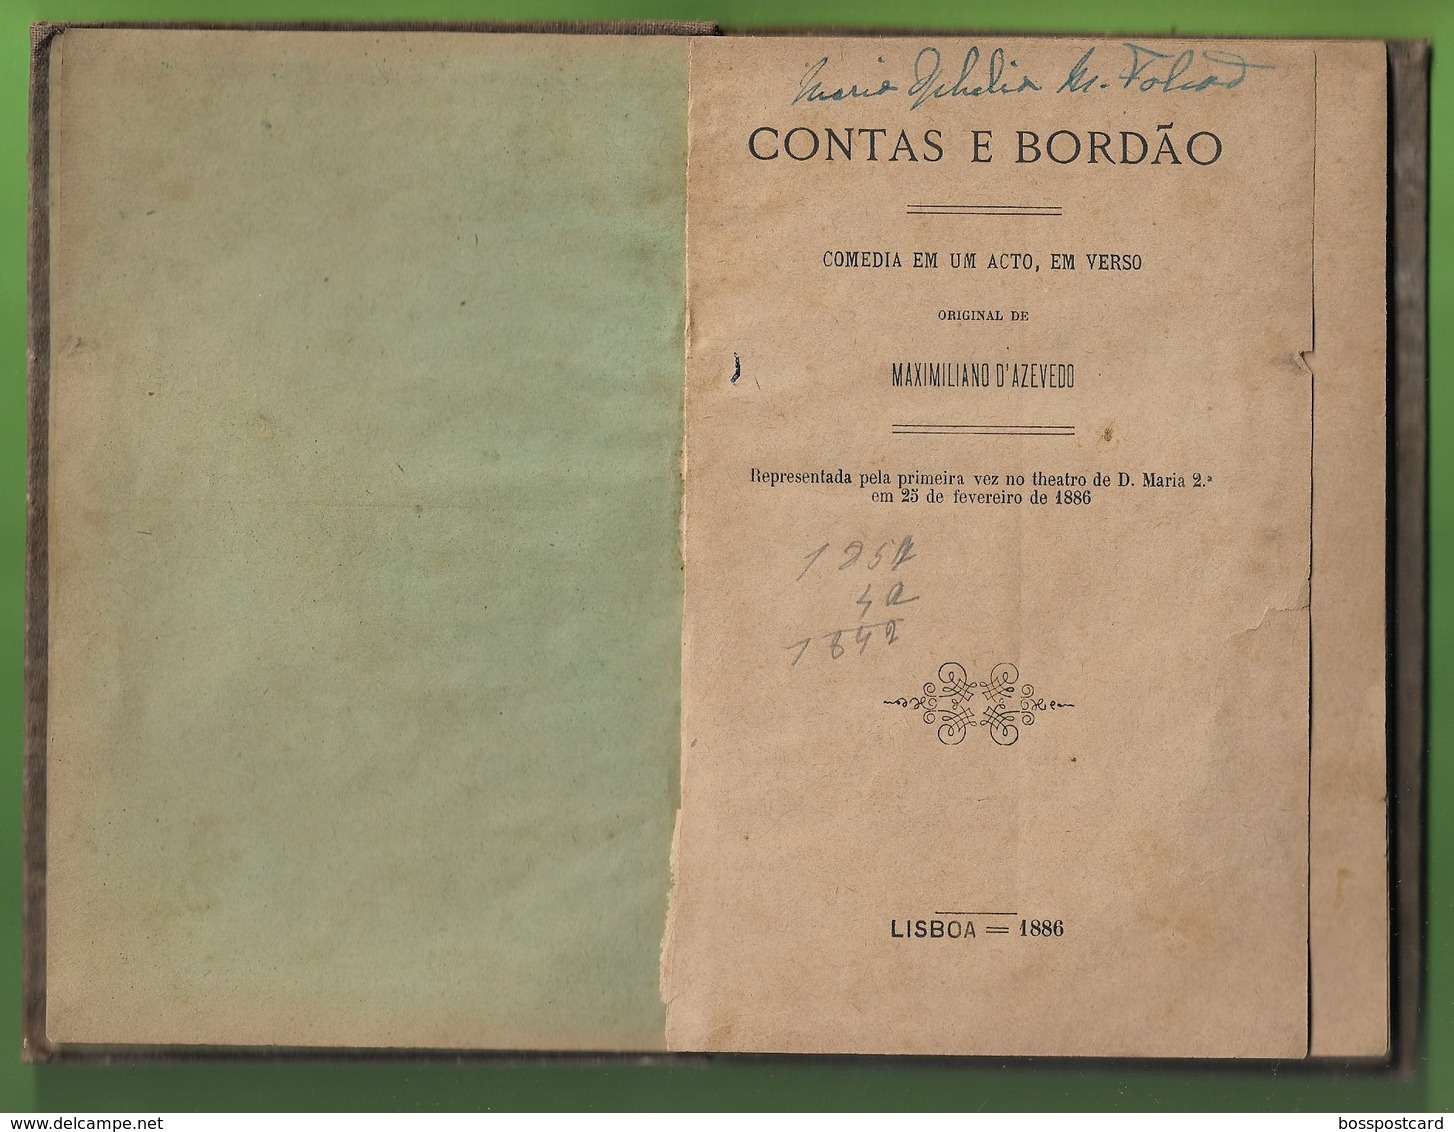 Lisboa - Contas E Bordão - Maximiliano D'Azevedo, 1886 - Teatro - Portugal - Theater